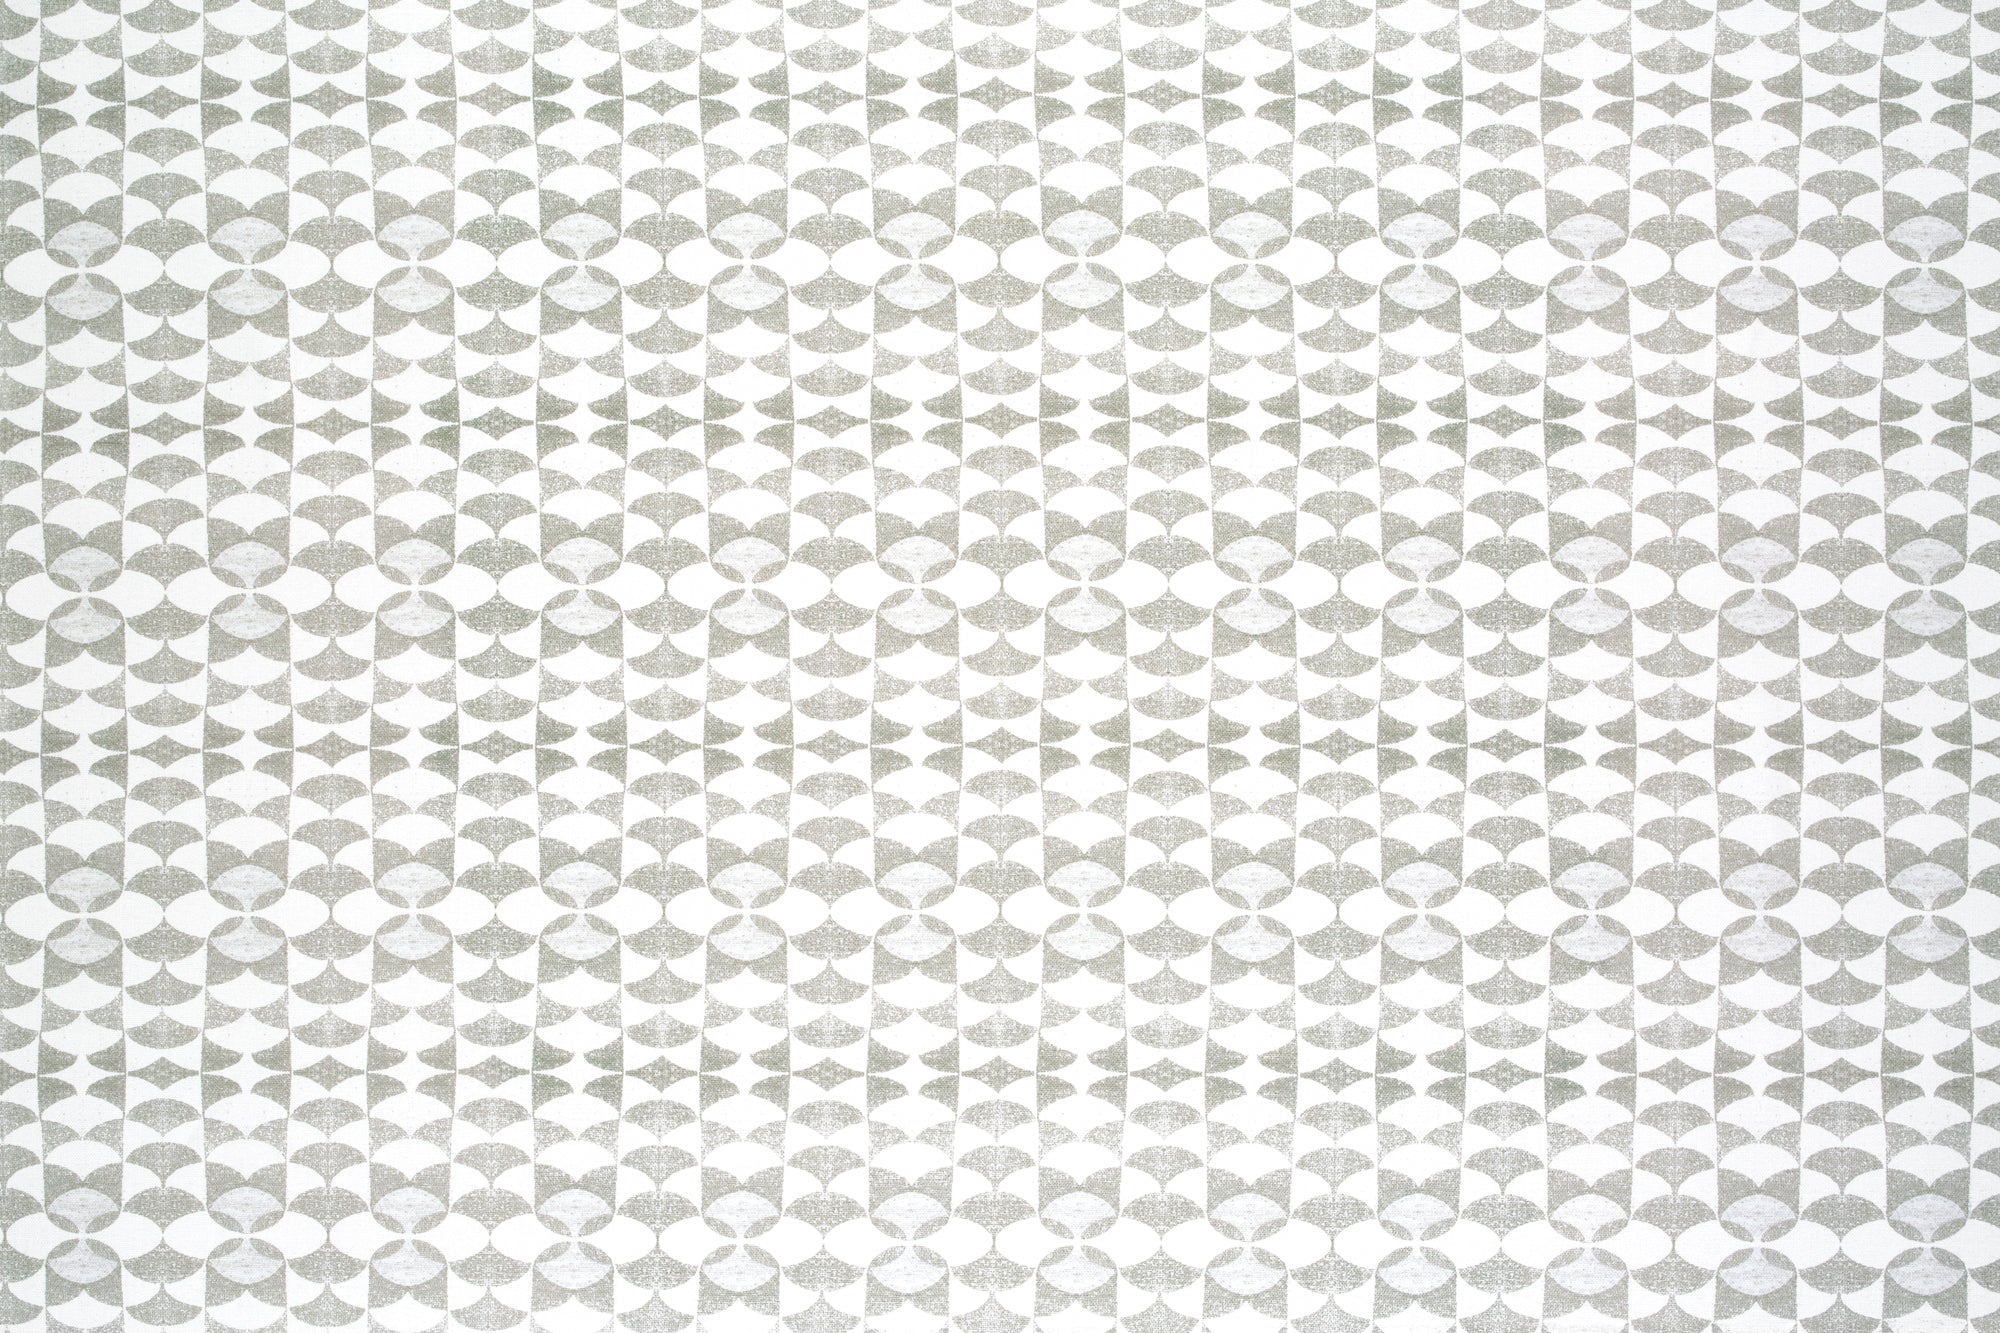 Detail of fabric in a geometric stripe pattern in light gray on a white field.